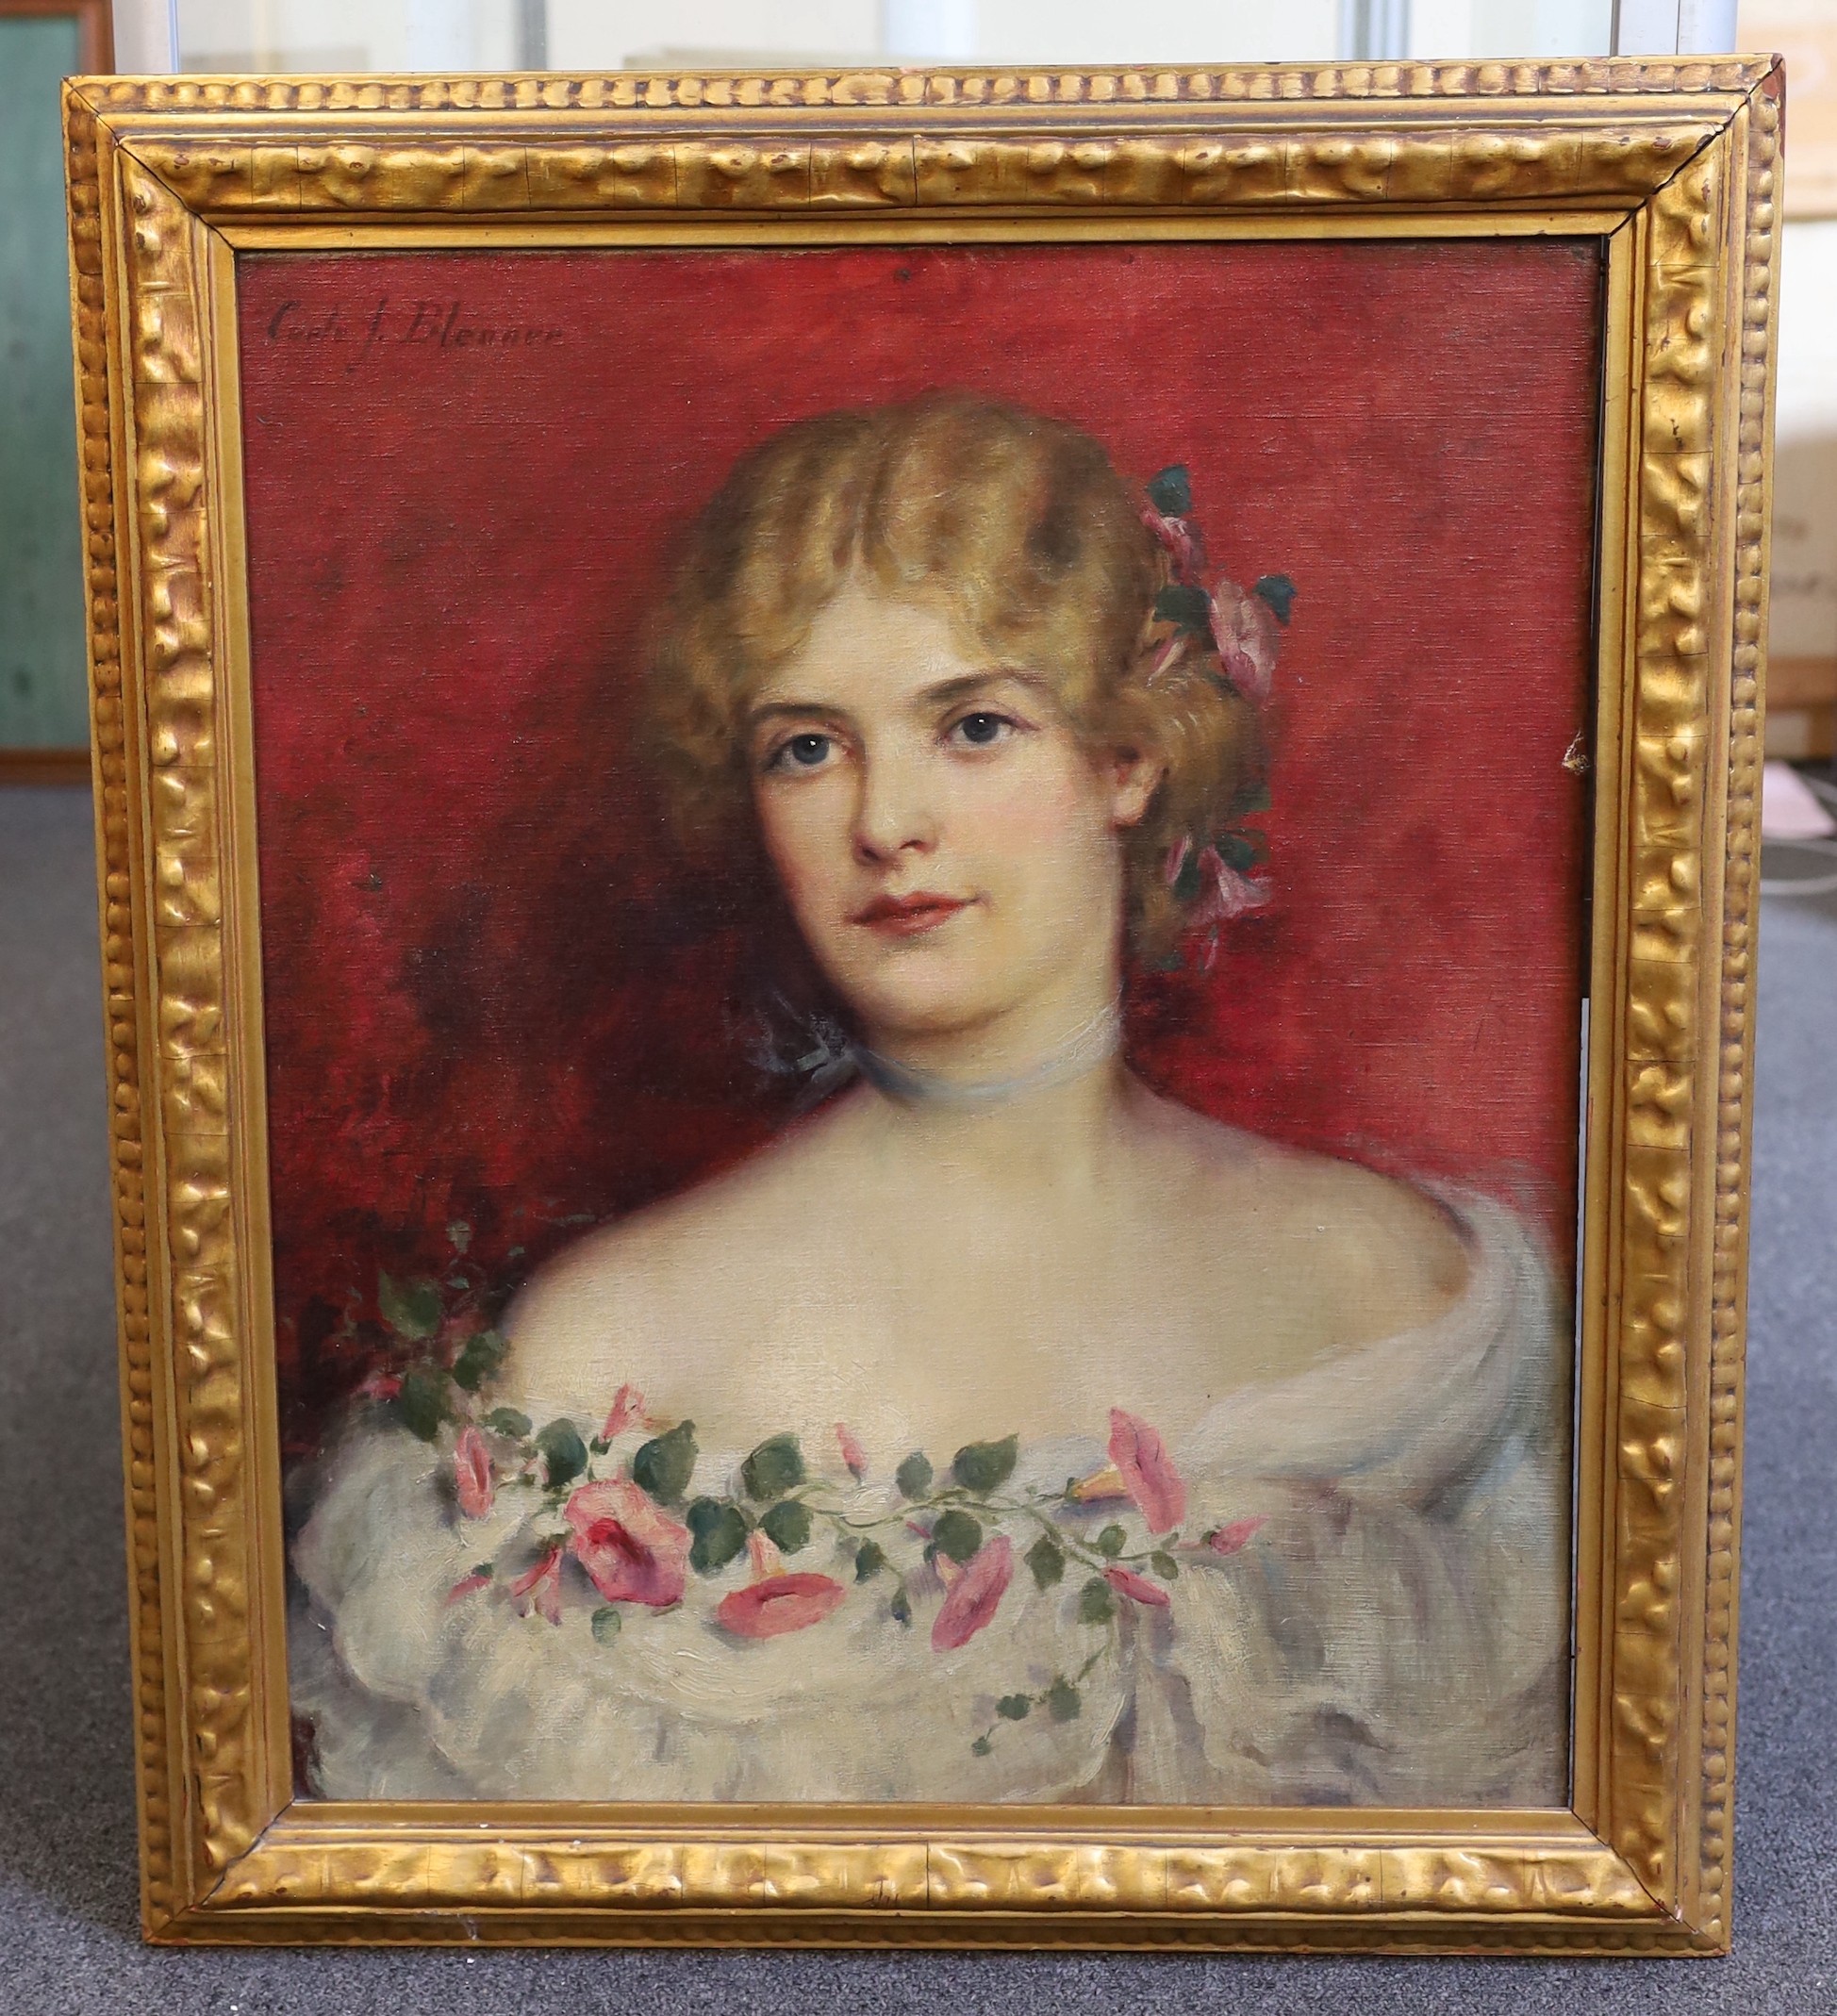 Carle John Blenner (American, 1862-1952), Portrait of a lady, oil on canvas board, 60 x 50cm